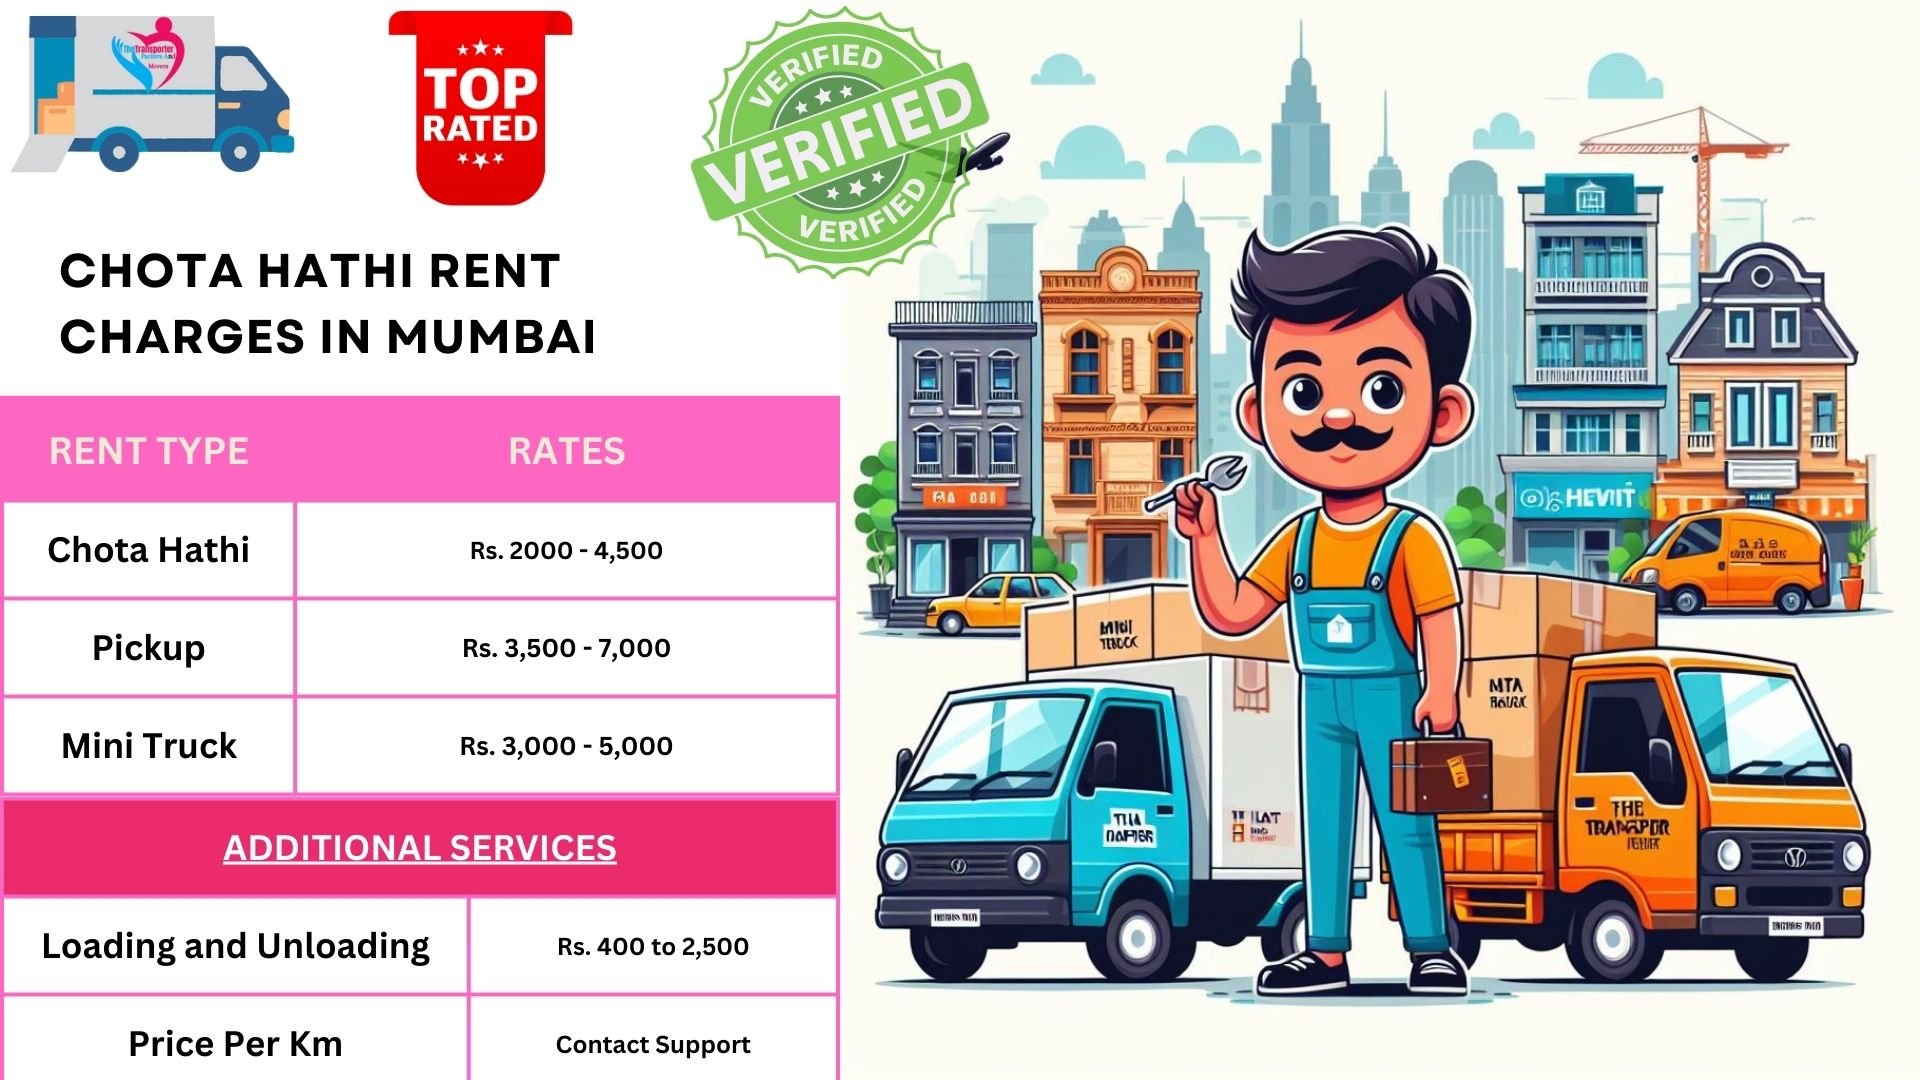 Getting the Best Chota Hathi on Rent in Mumbai